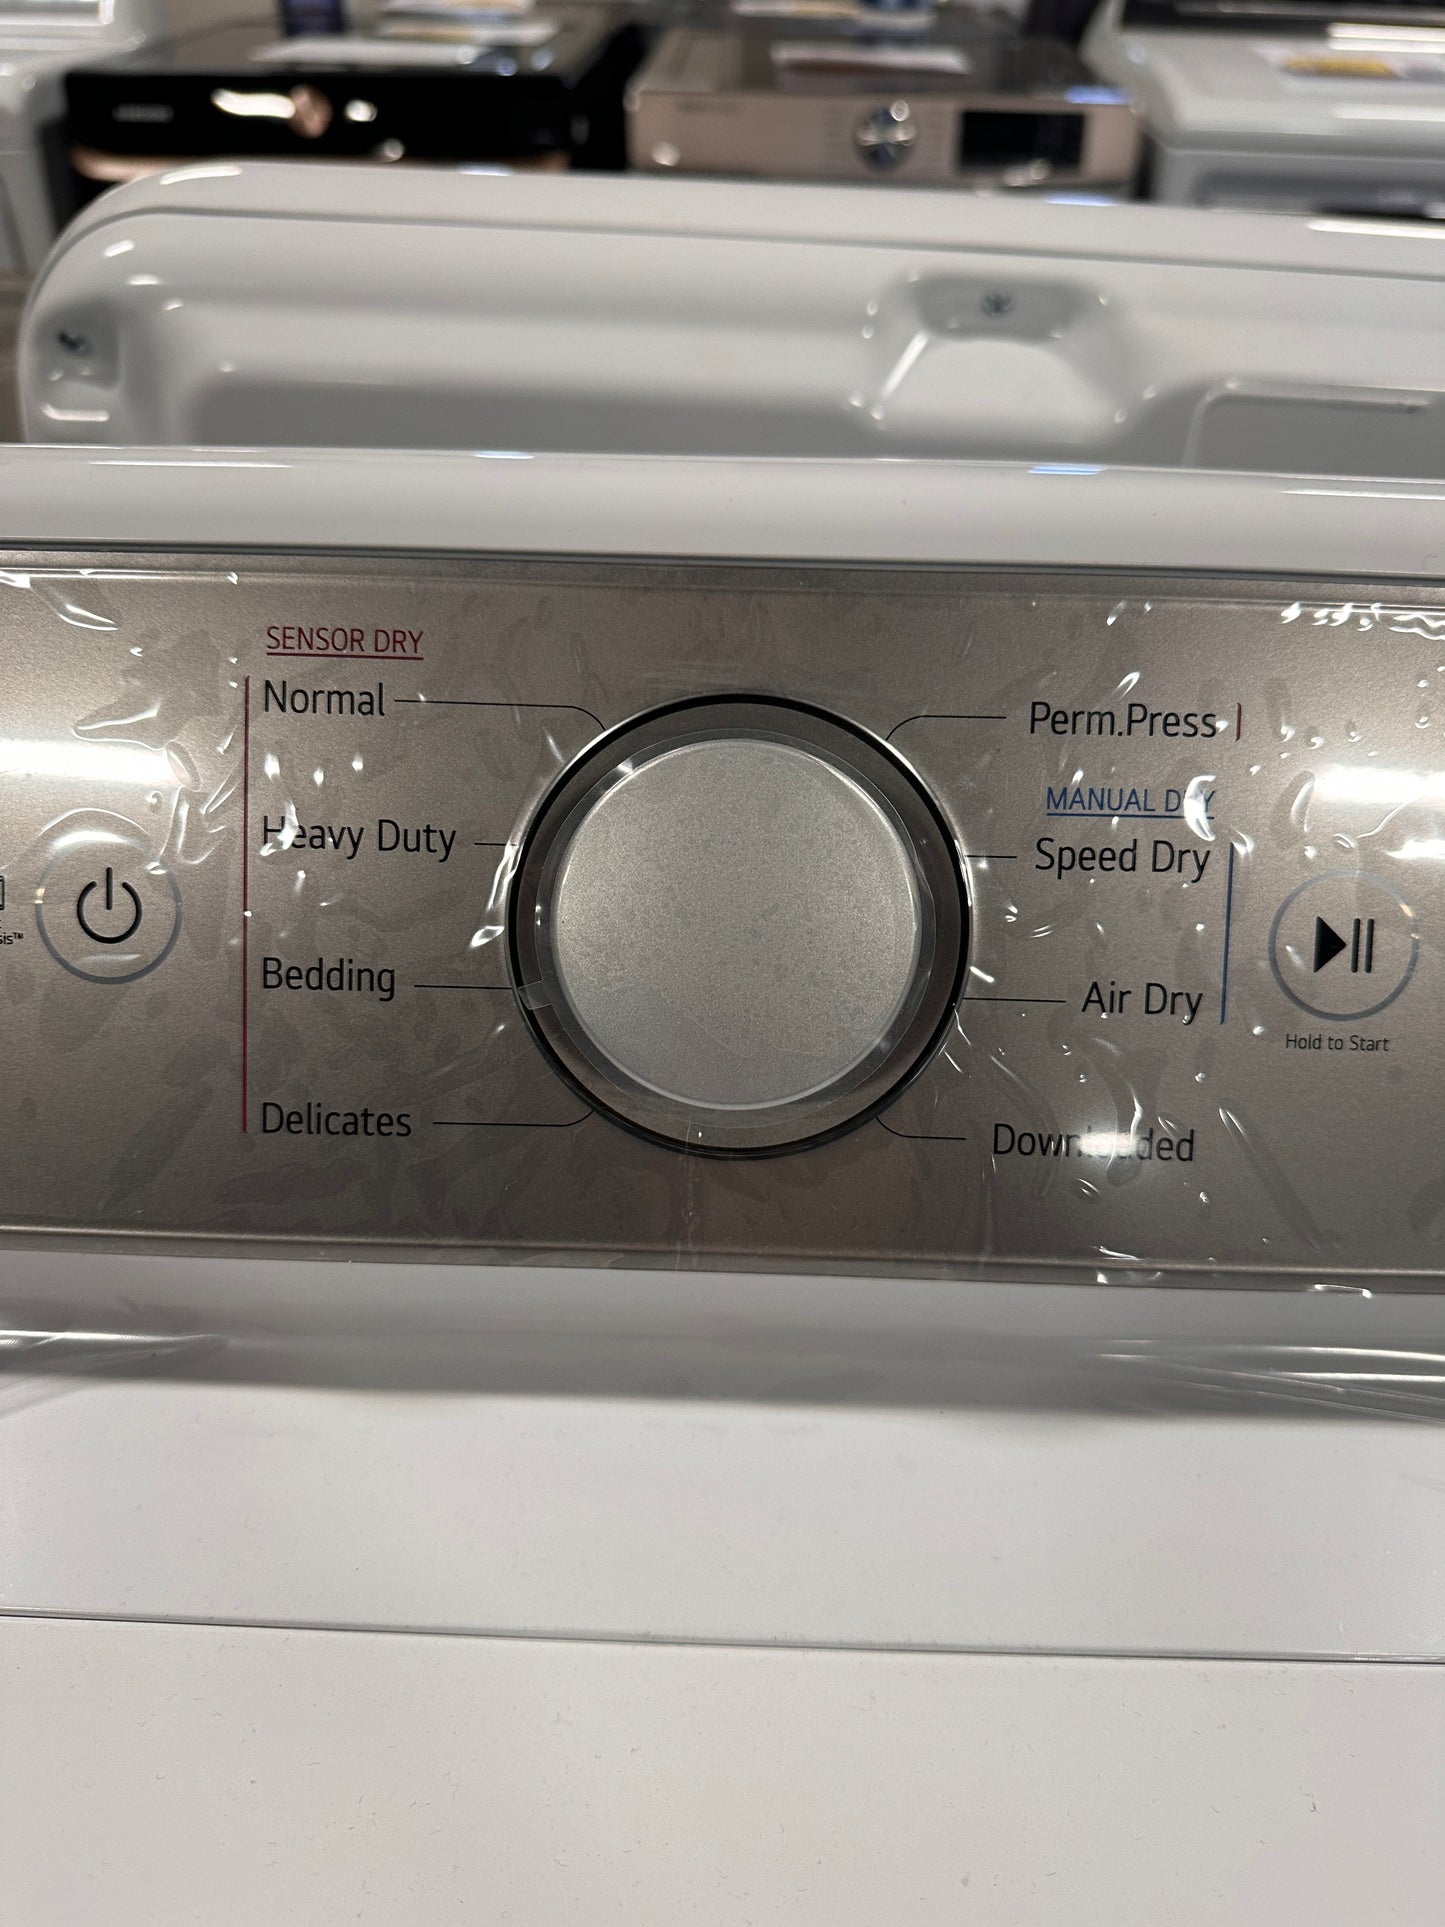 NEW Smart Gas Dryer with EasyLoad Door - White  Model:DLG7401WE  DRY12330